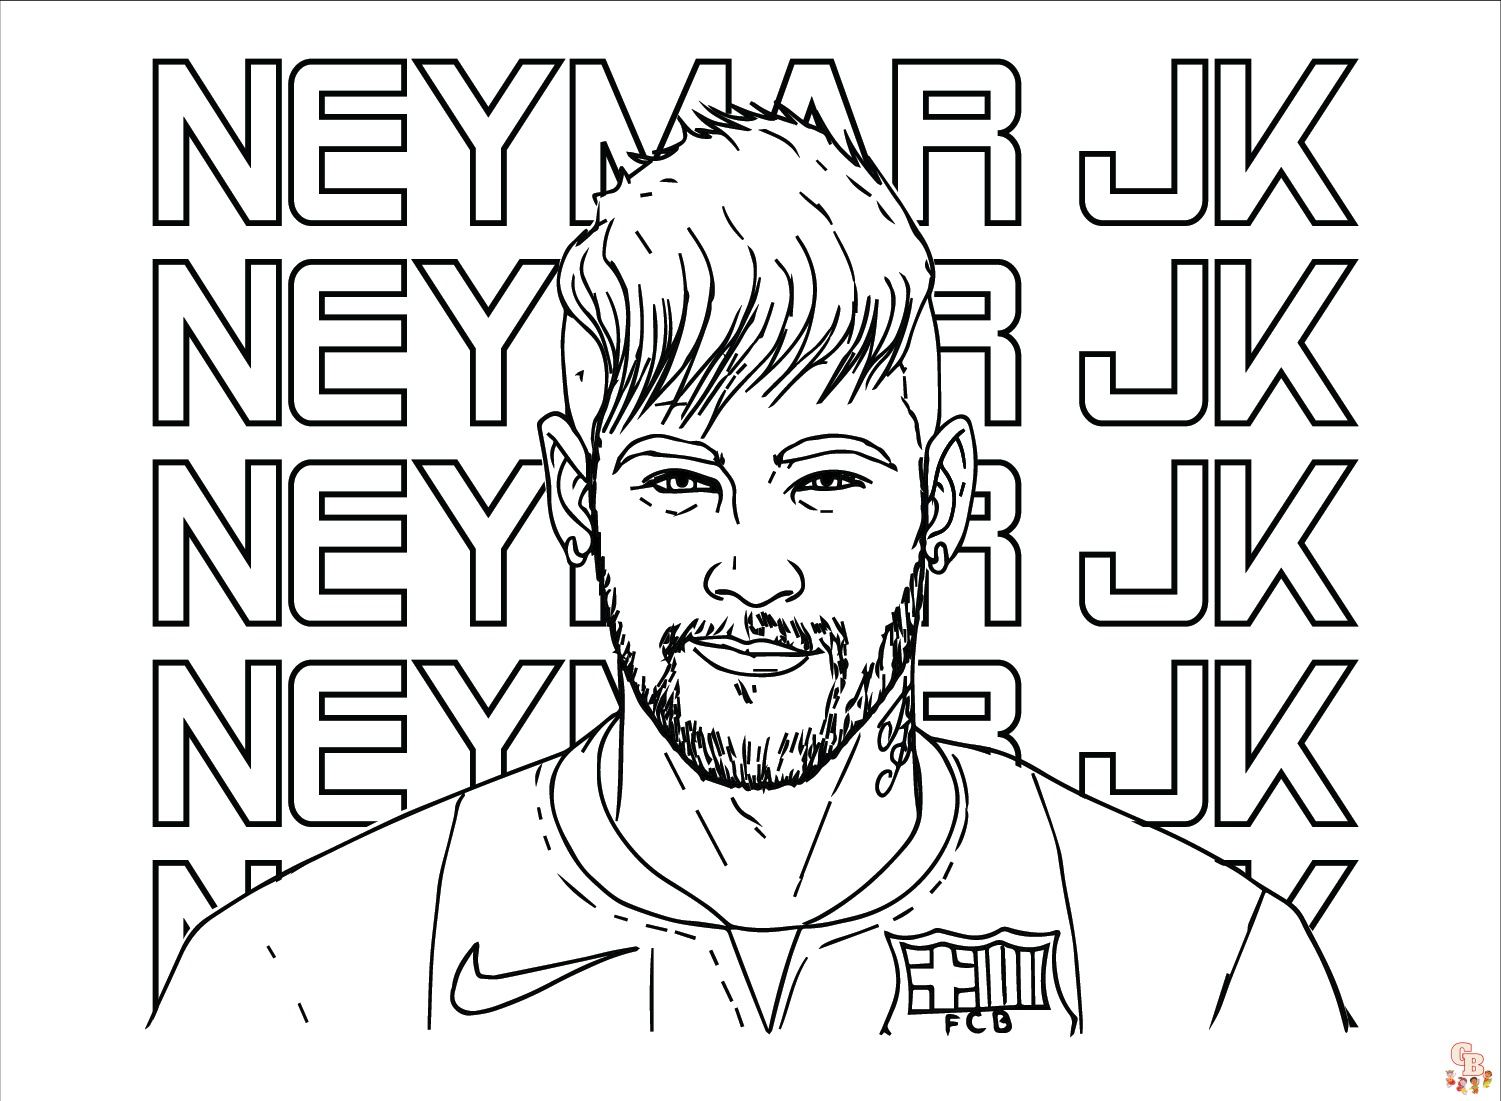 Neymar JK